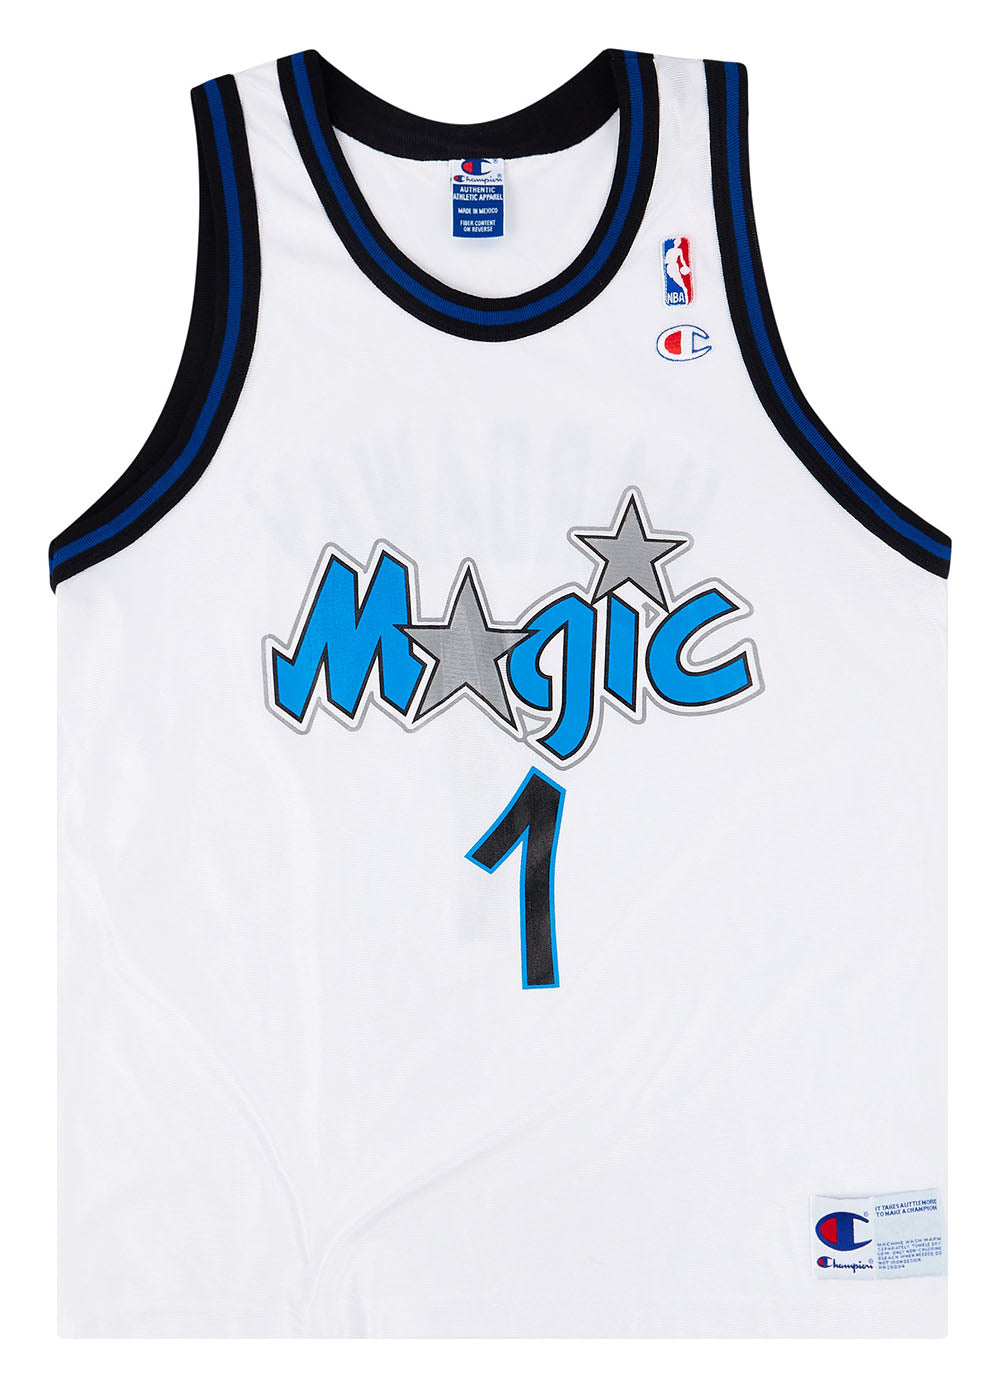 Orlando Magic Home Uniform  Orlando magic, Jersey design, Nba uniforms